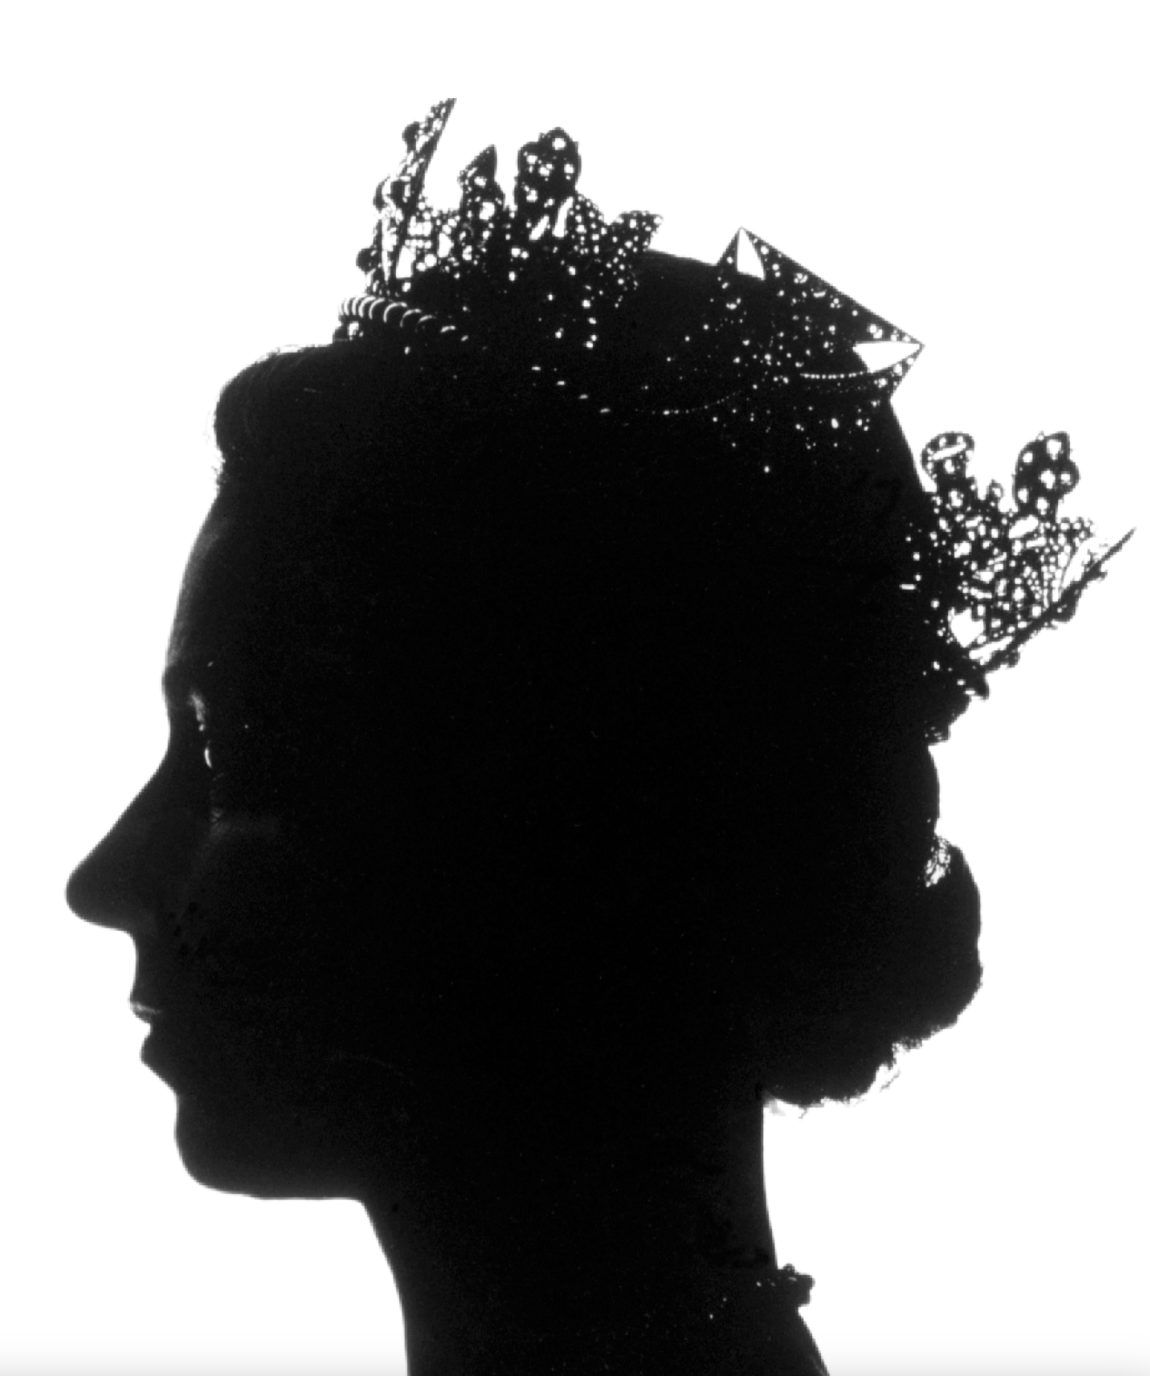 Queen Silhouette